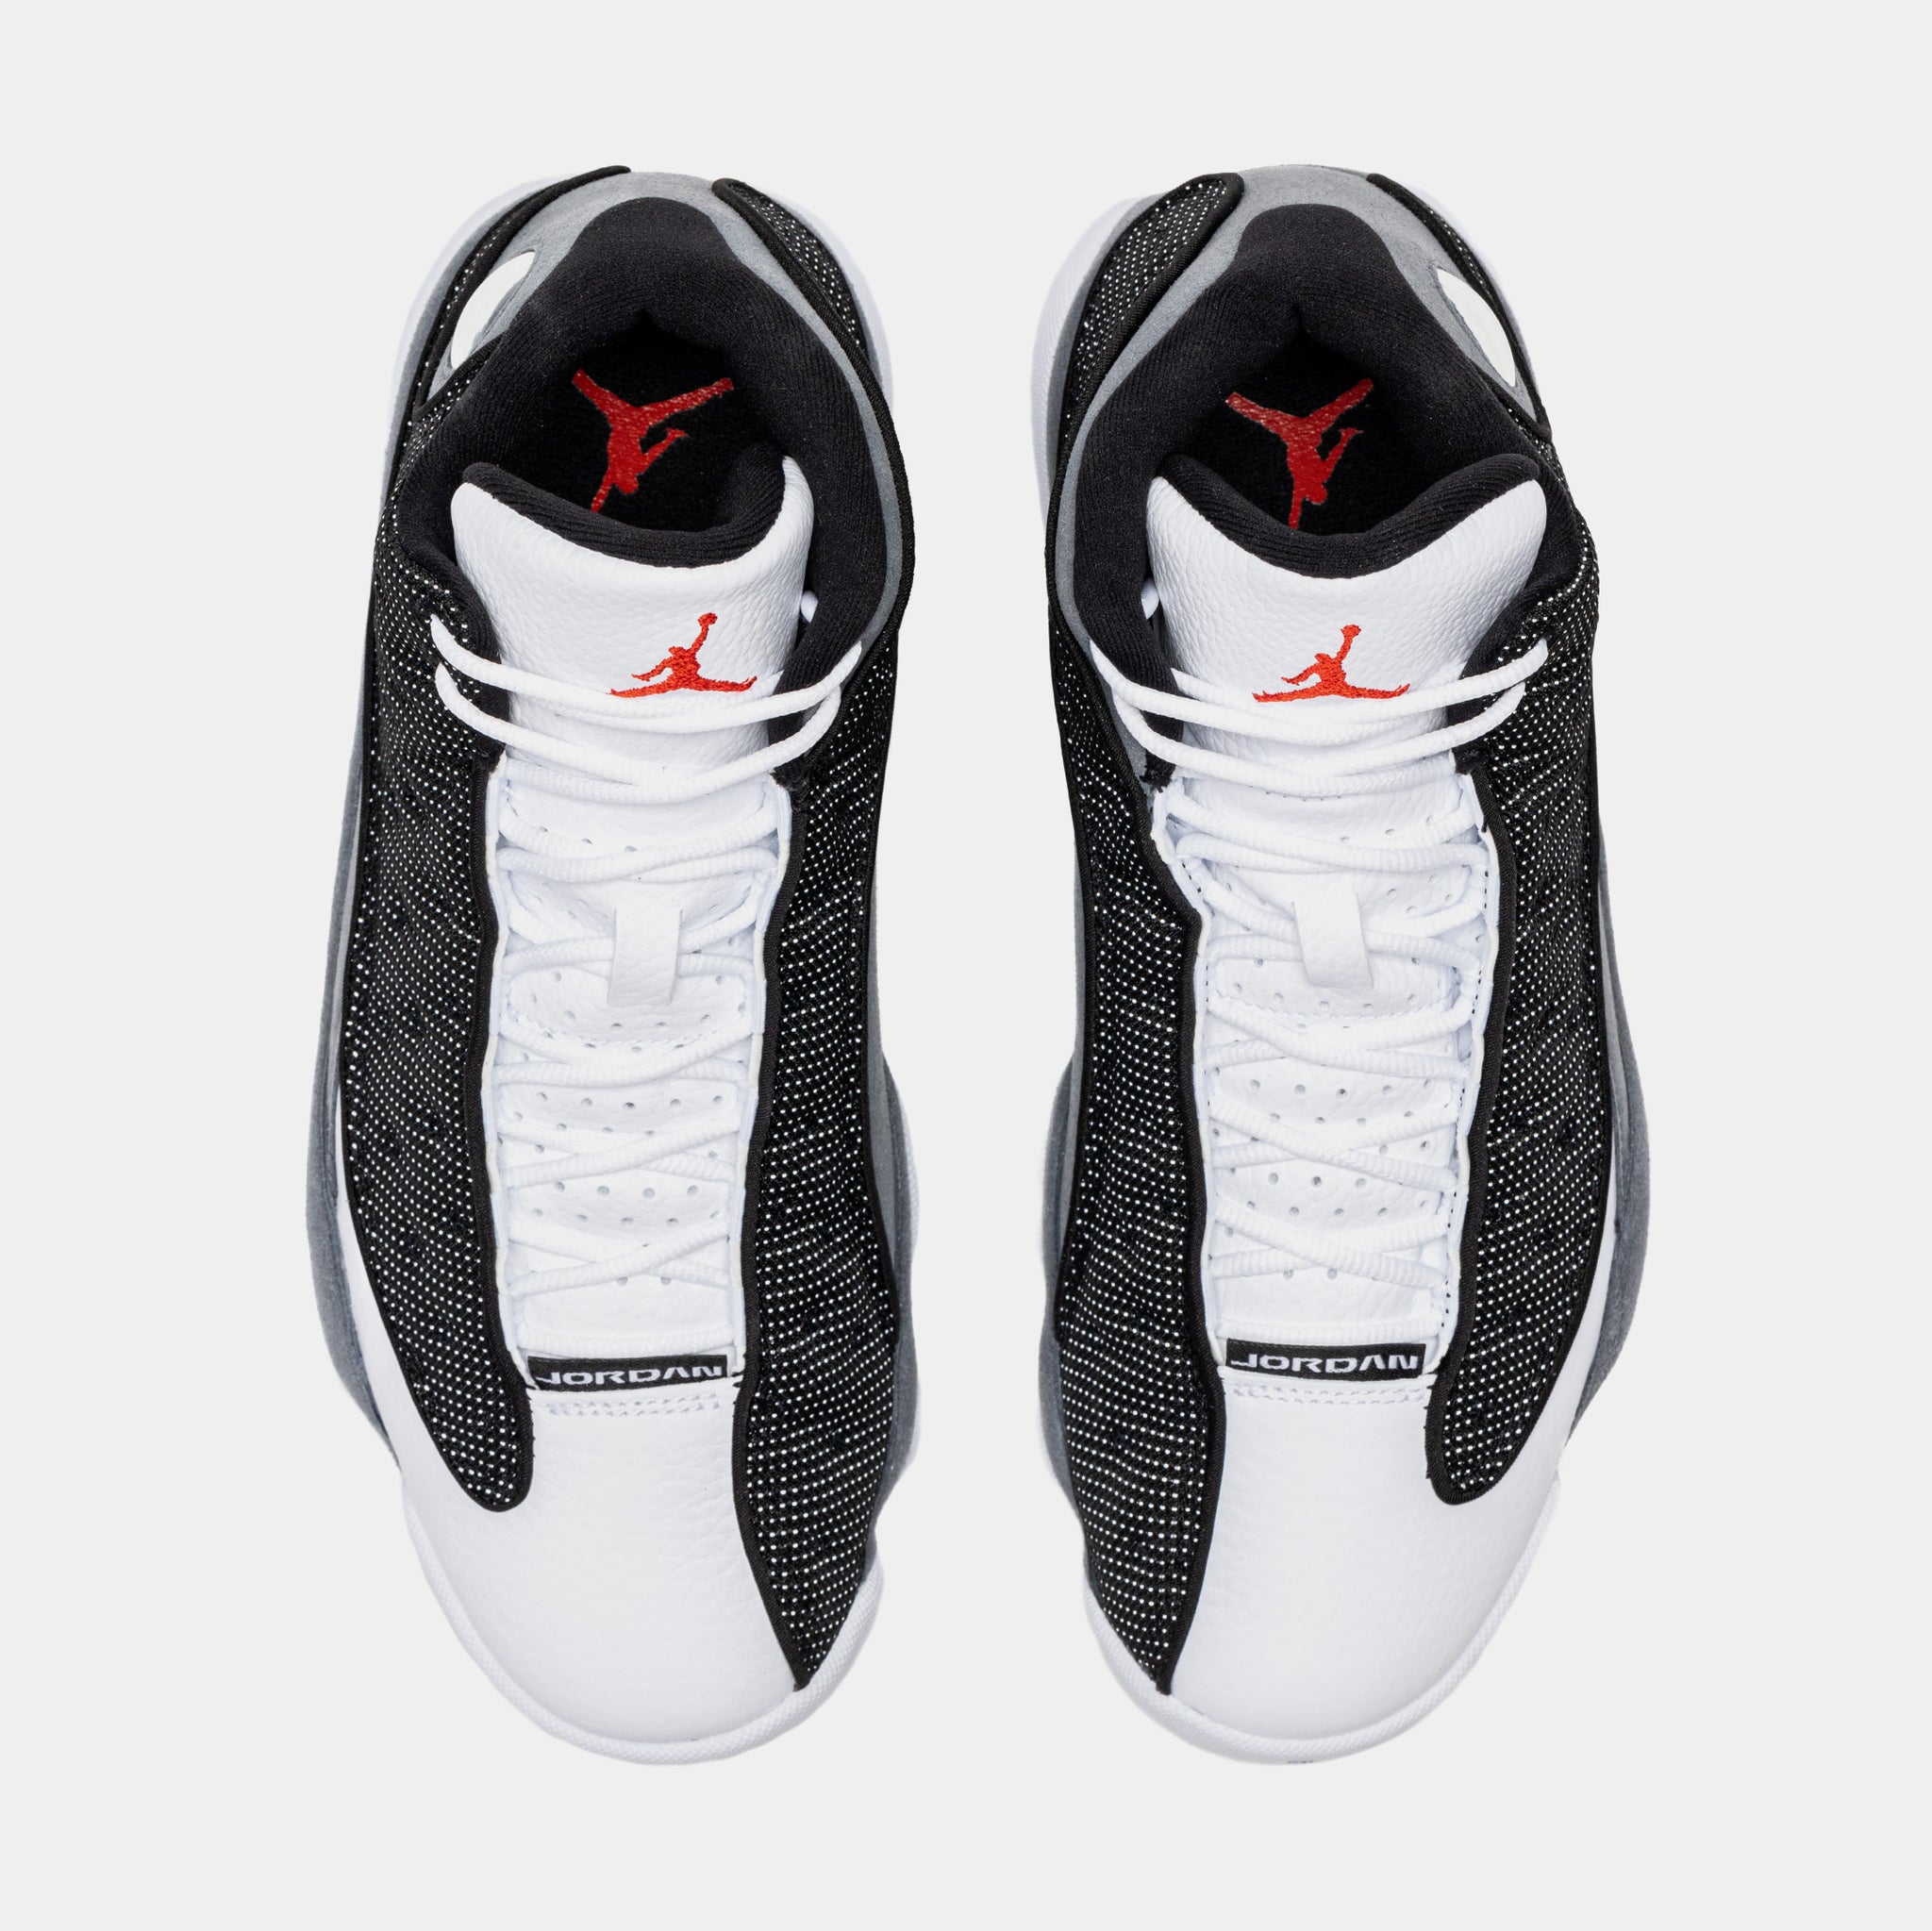 Air Jordan 13 Retro Black Flint: Review & On-Feet 